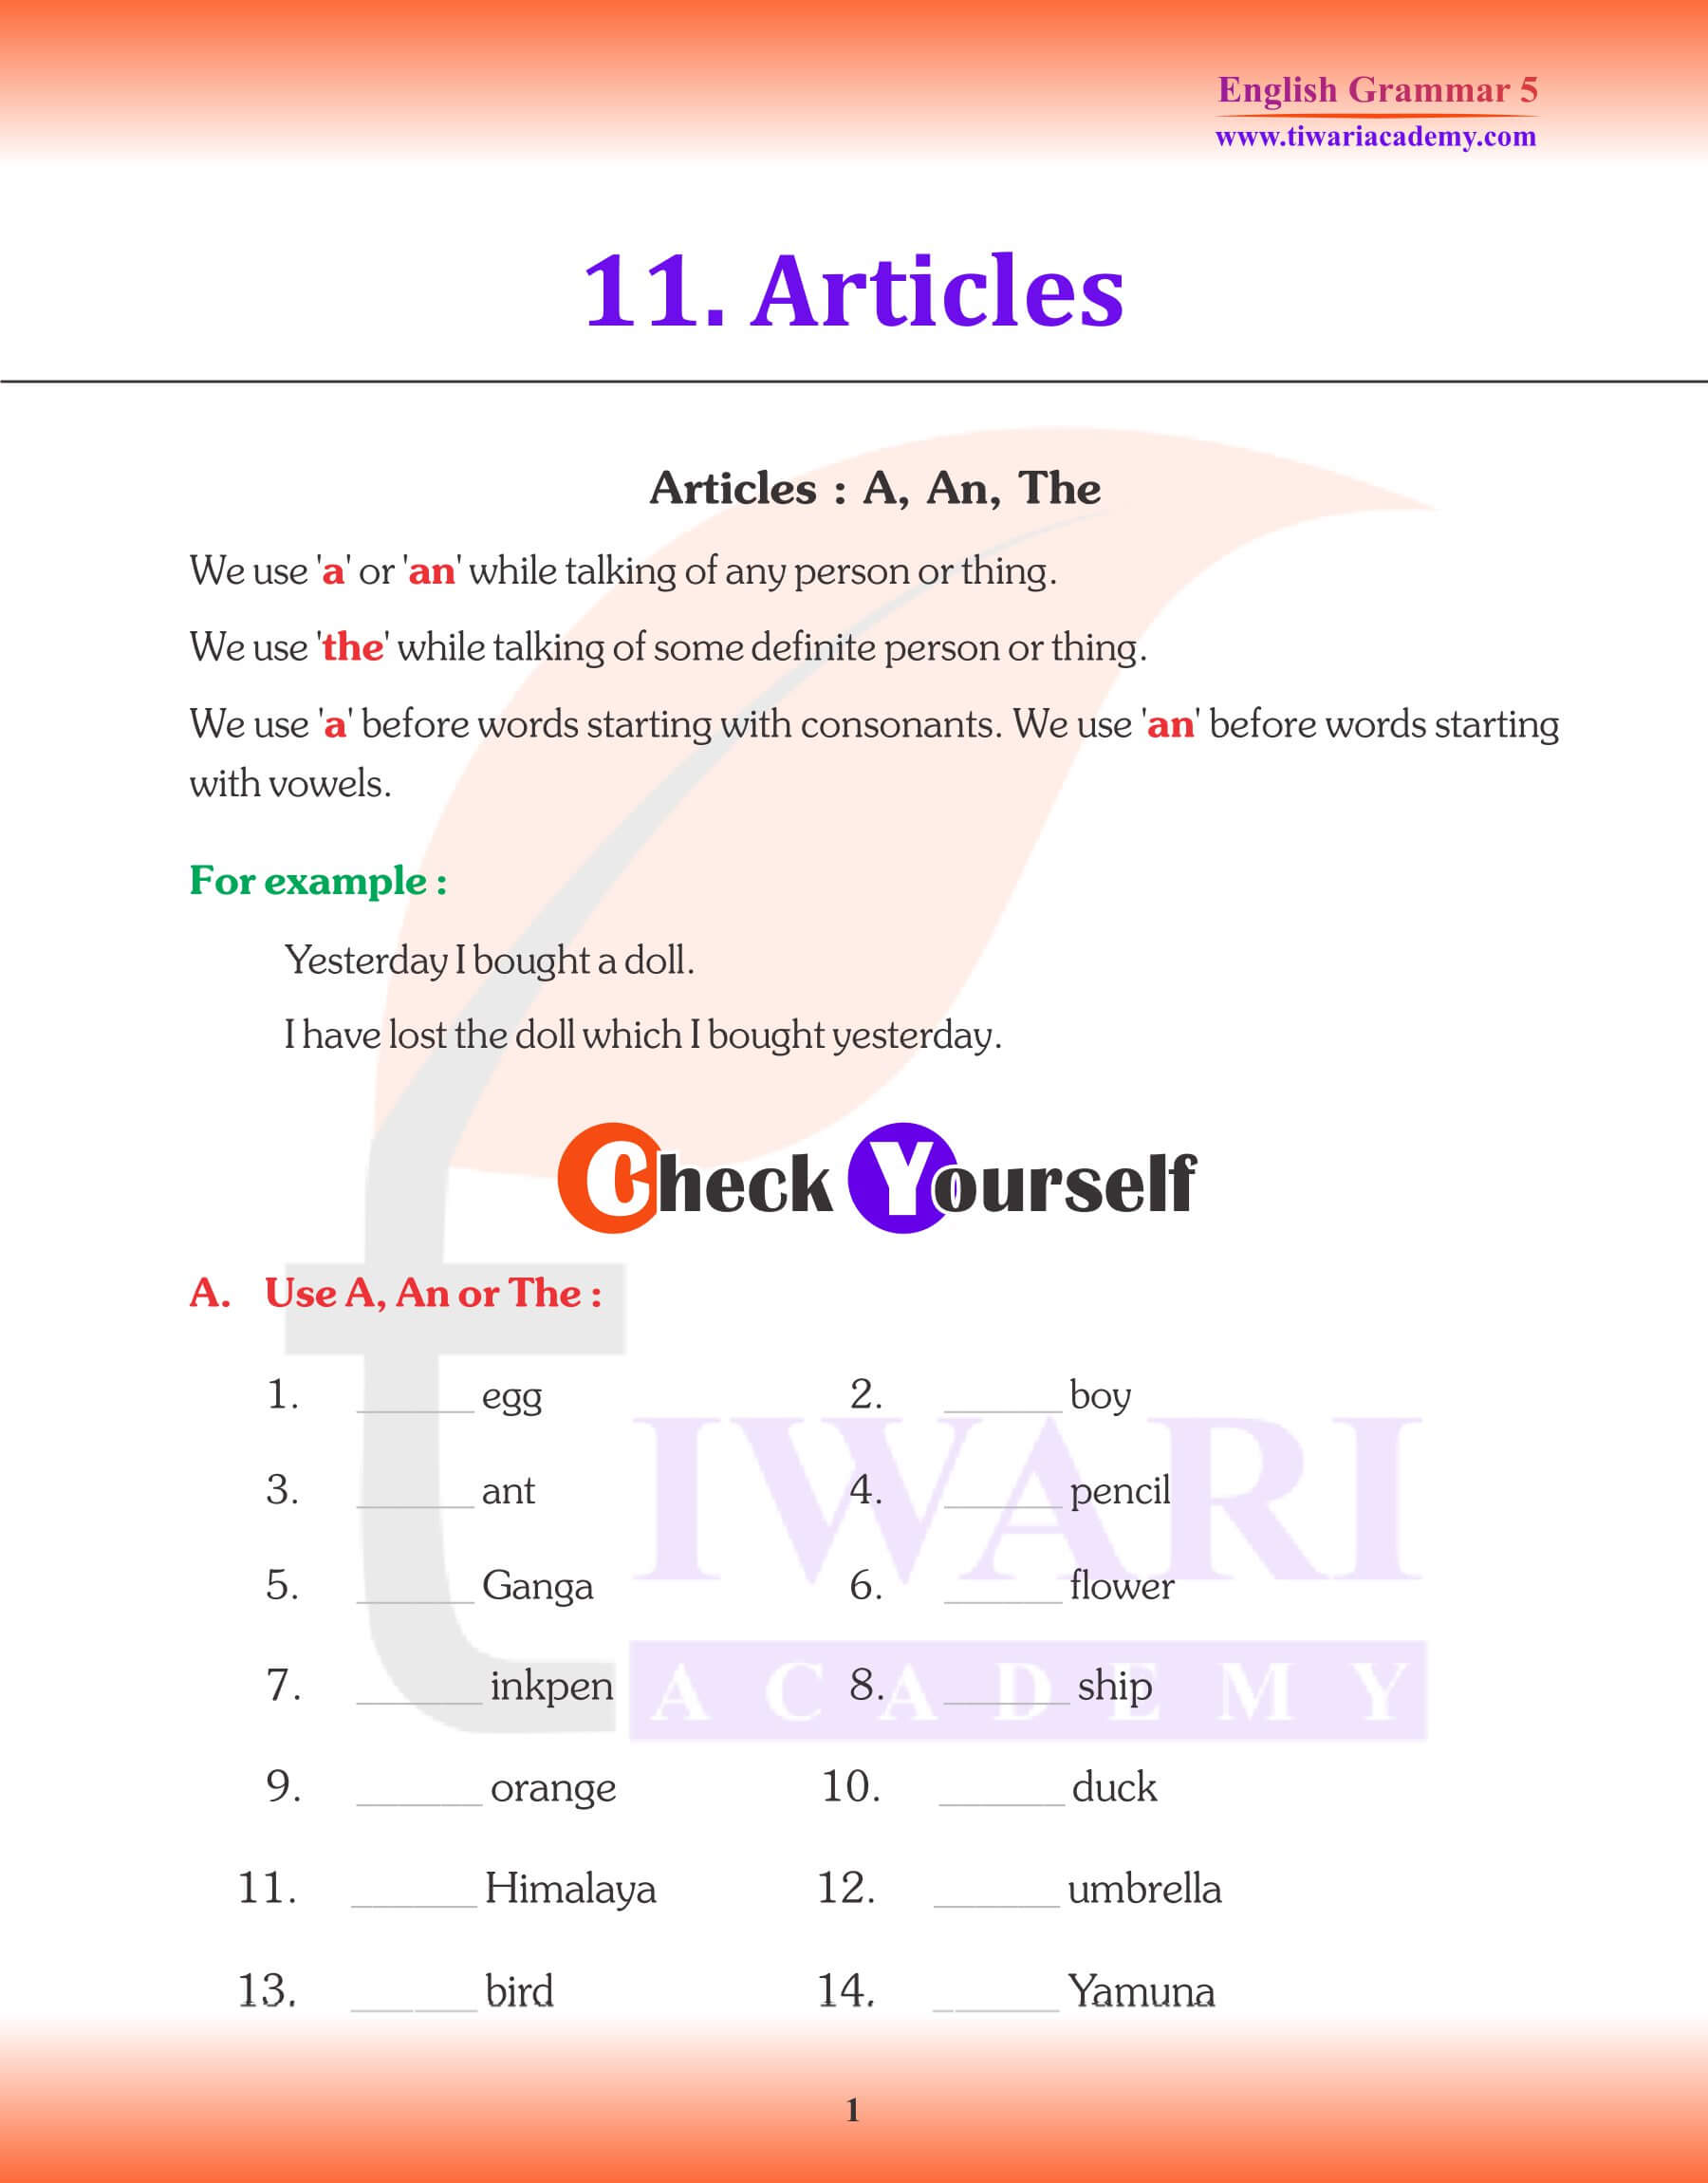 Class 5 English Grammar Articles Revision Book